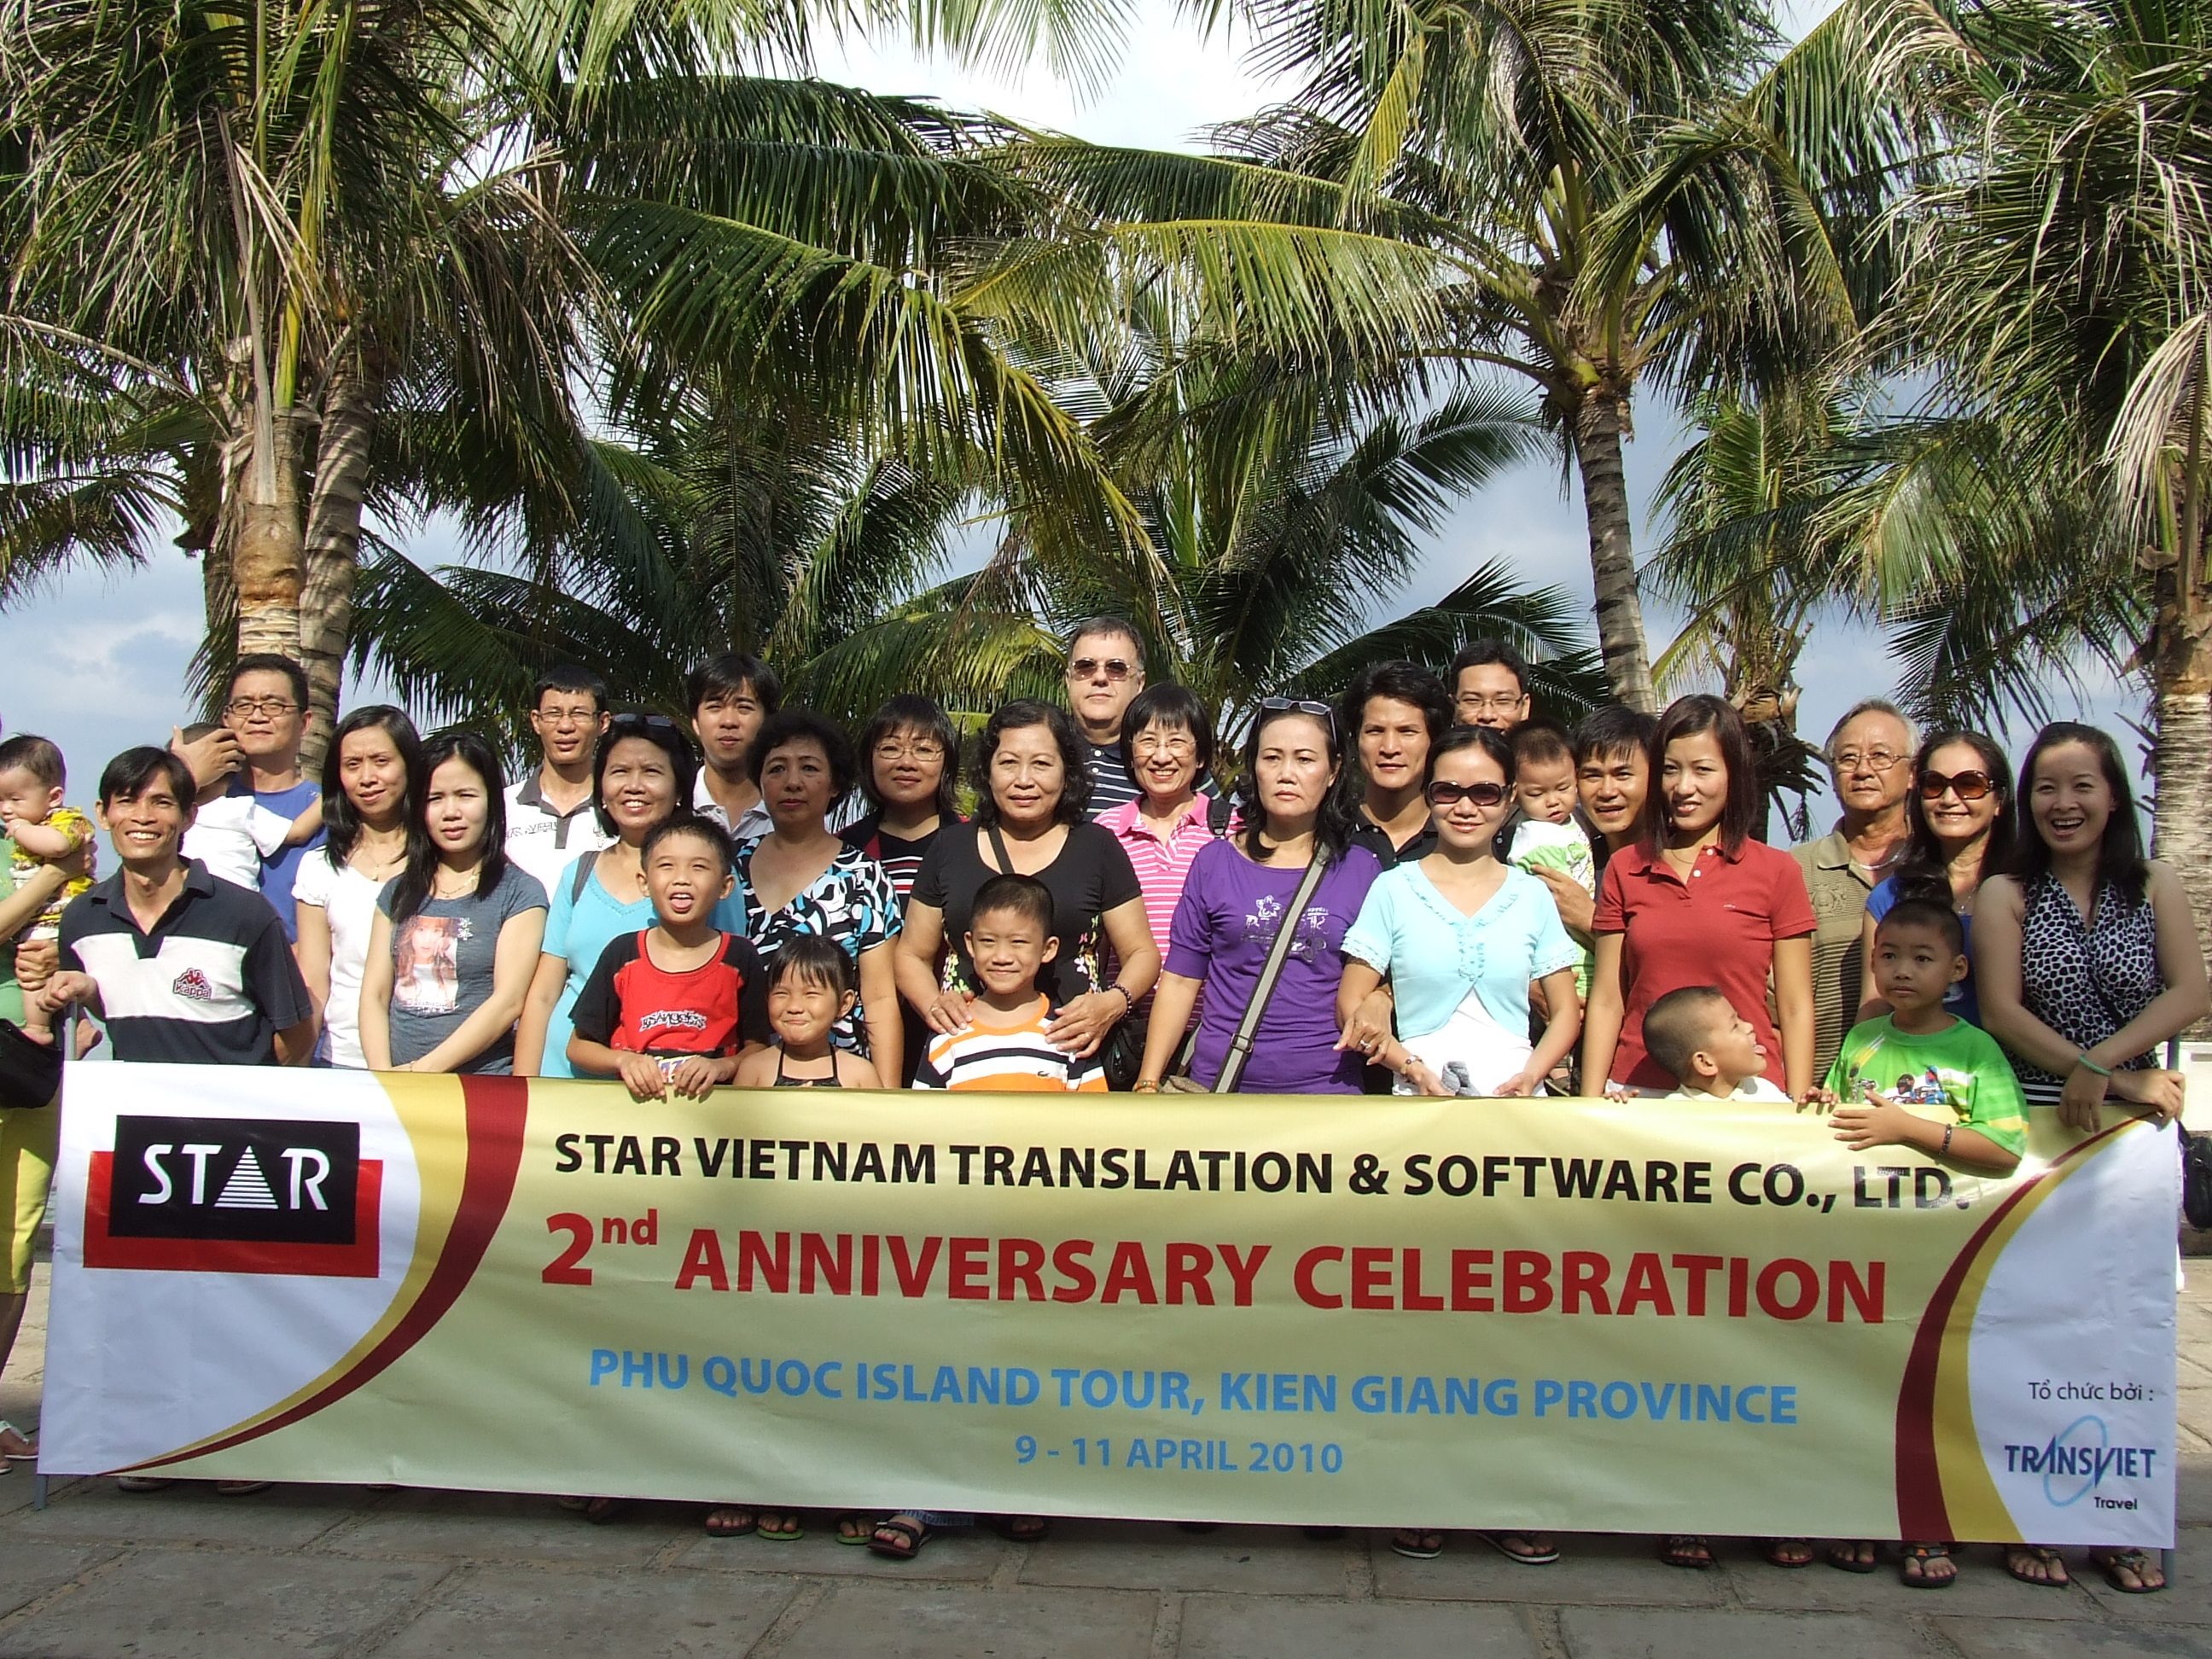 STAR Vietnam celebrates the 2nd anniversary of establishment – a tour of Phu Quoc Island (09 – 04/11/2010)